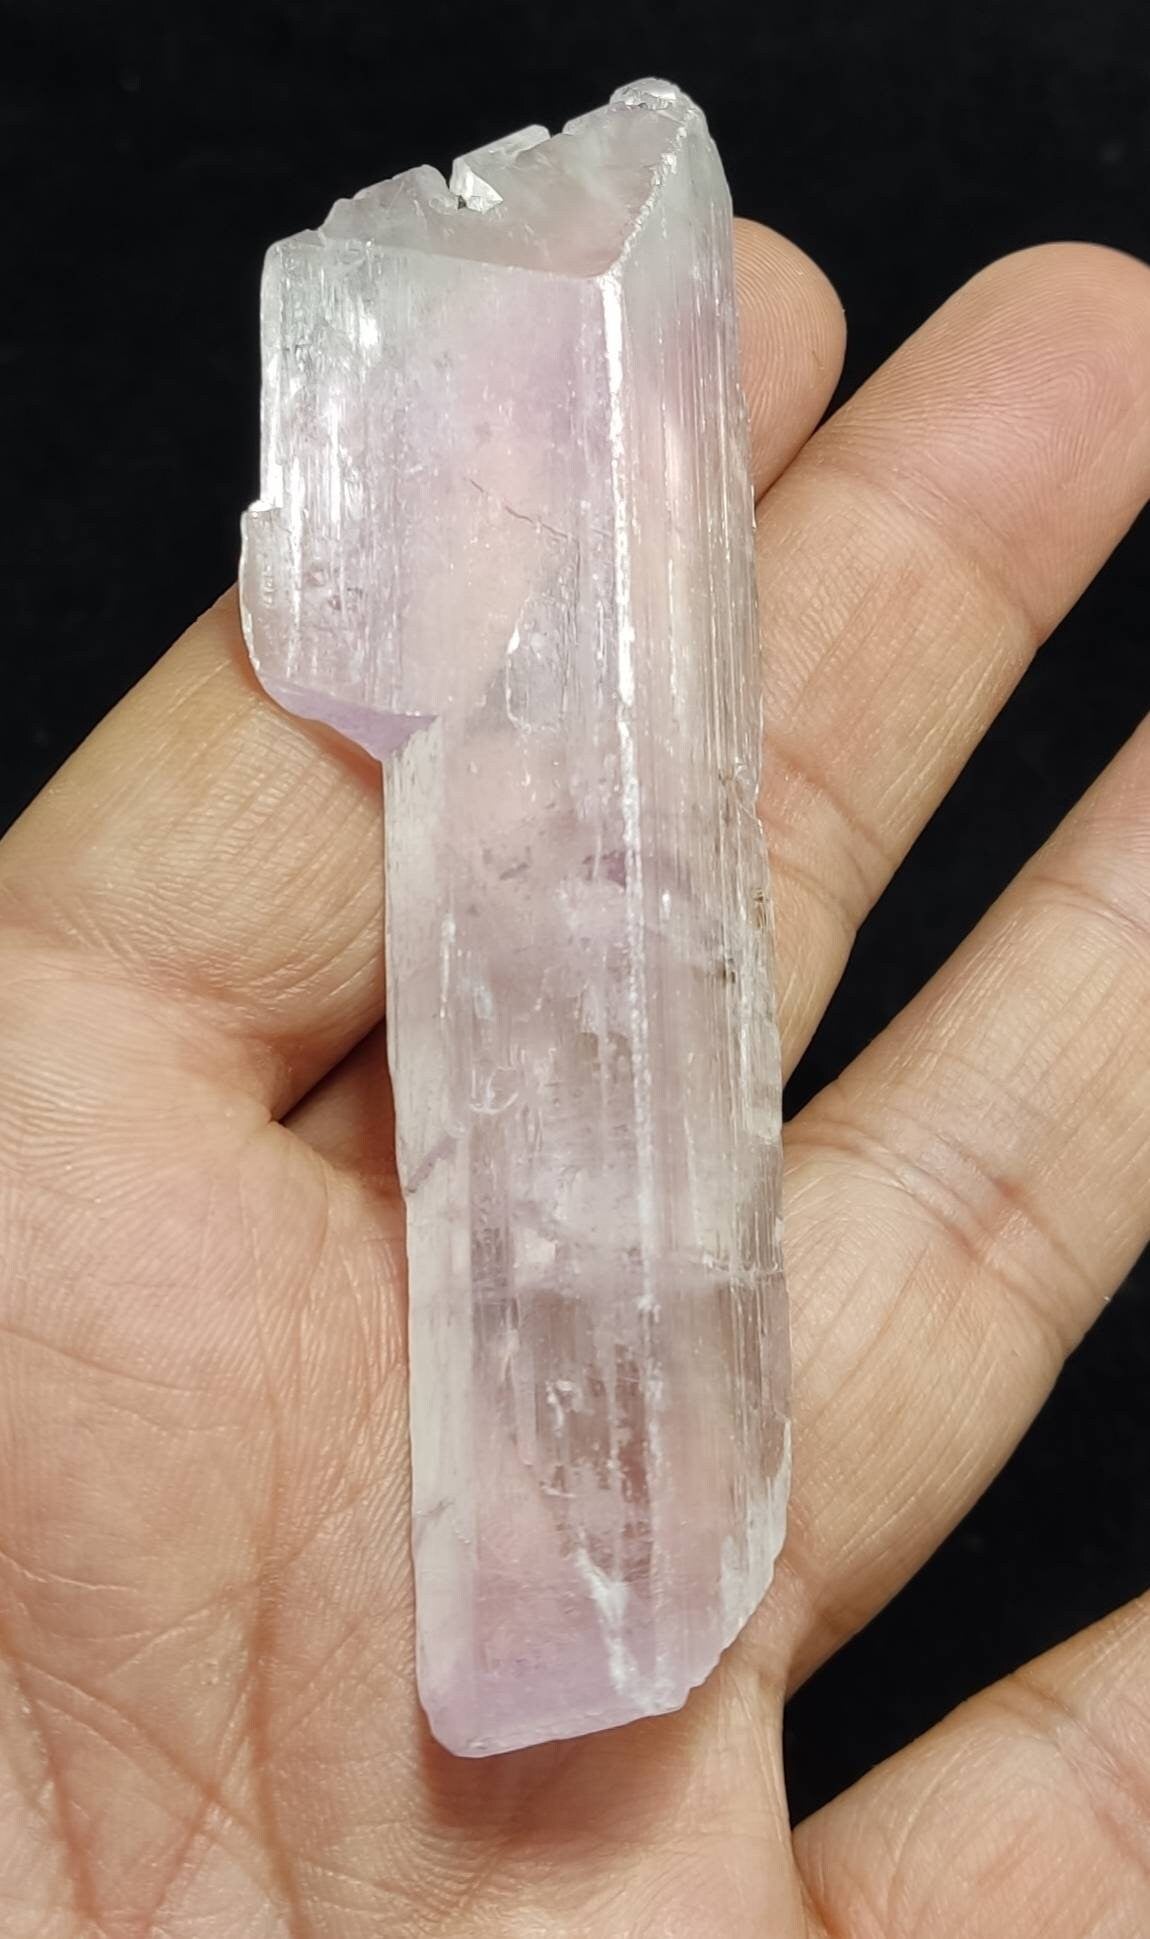 An amazing terminated purple crystal specimen of kunzite 63 grams